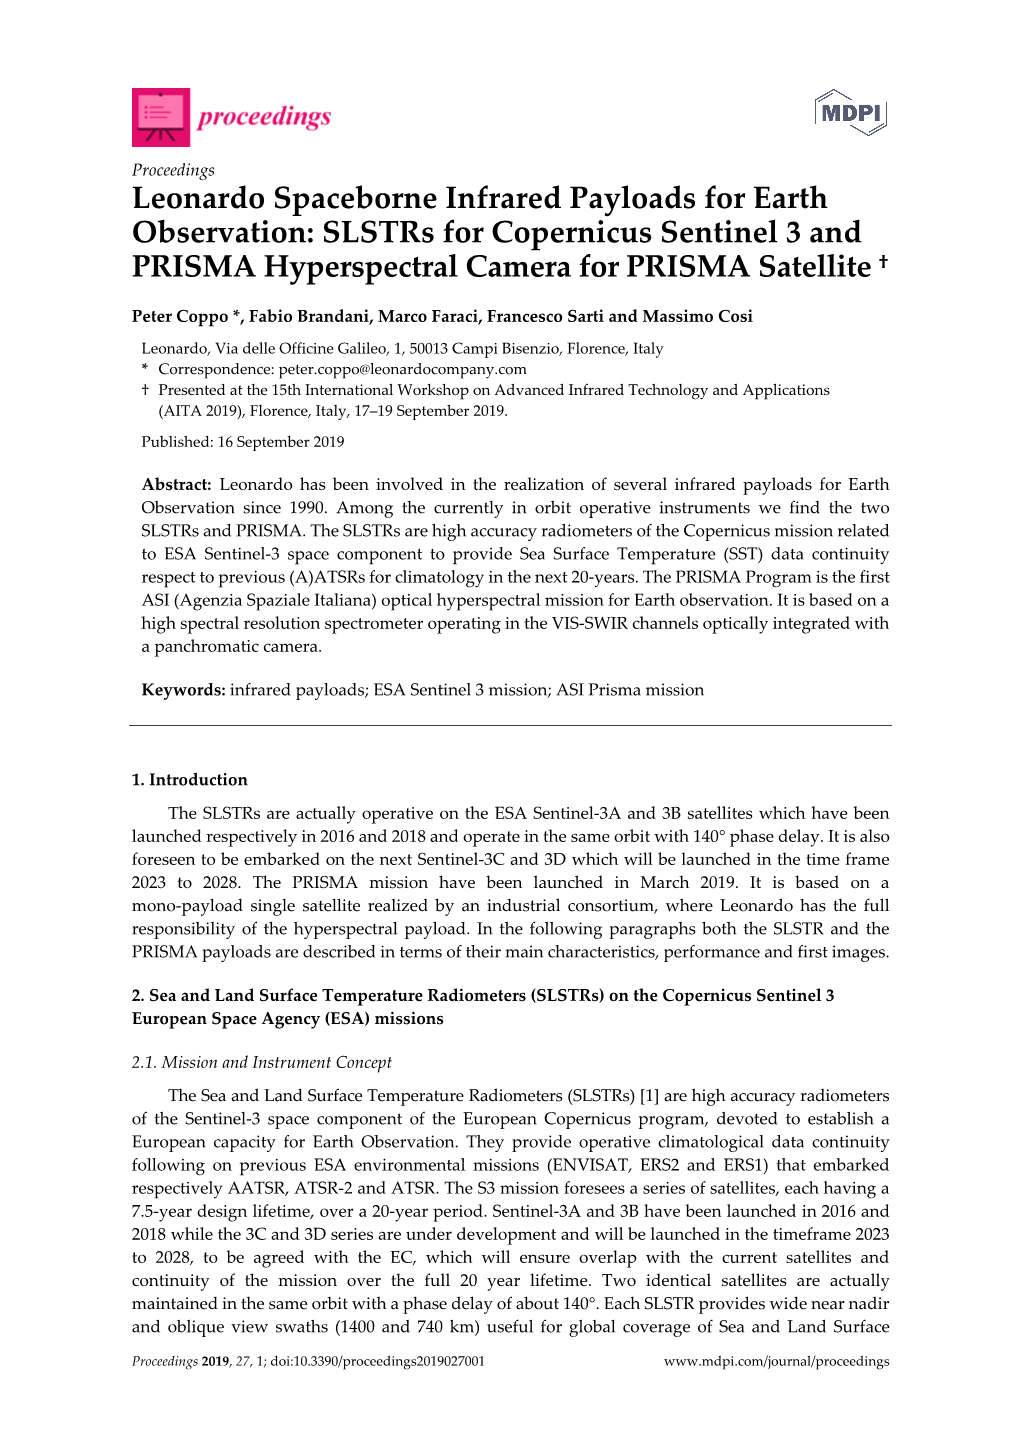 Leonardo Spaceborne Infrared Payloads for Earth Observation: Slstrs for Copernicus Sentinel 3 and PRISMA Hyperspectral Camera for PRISMA Satellite †